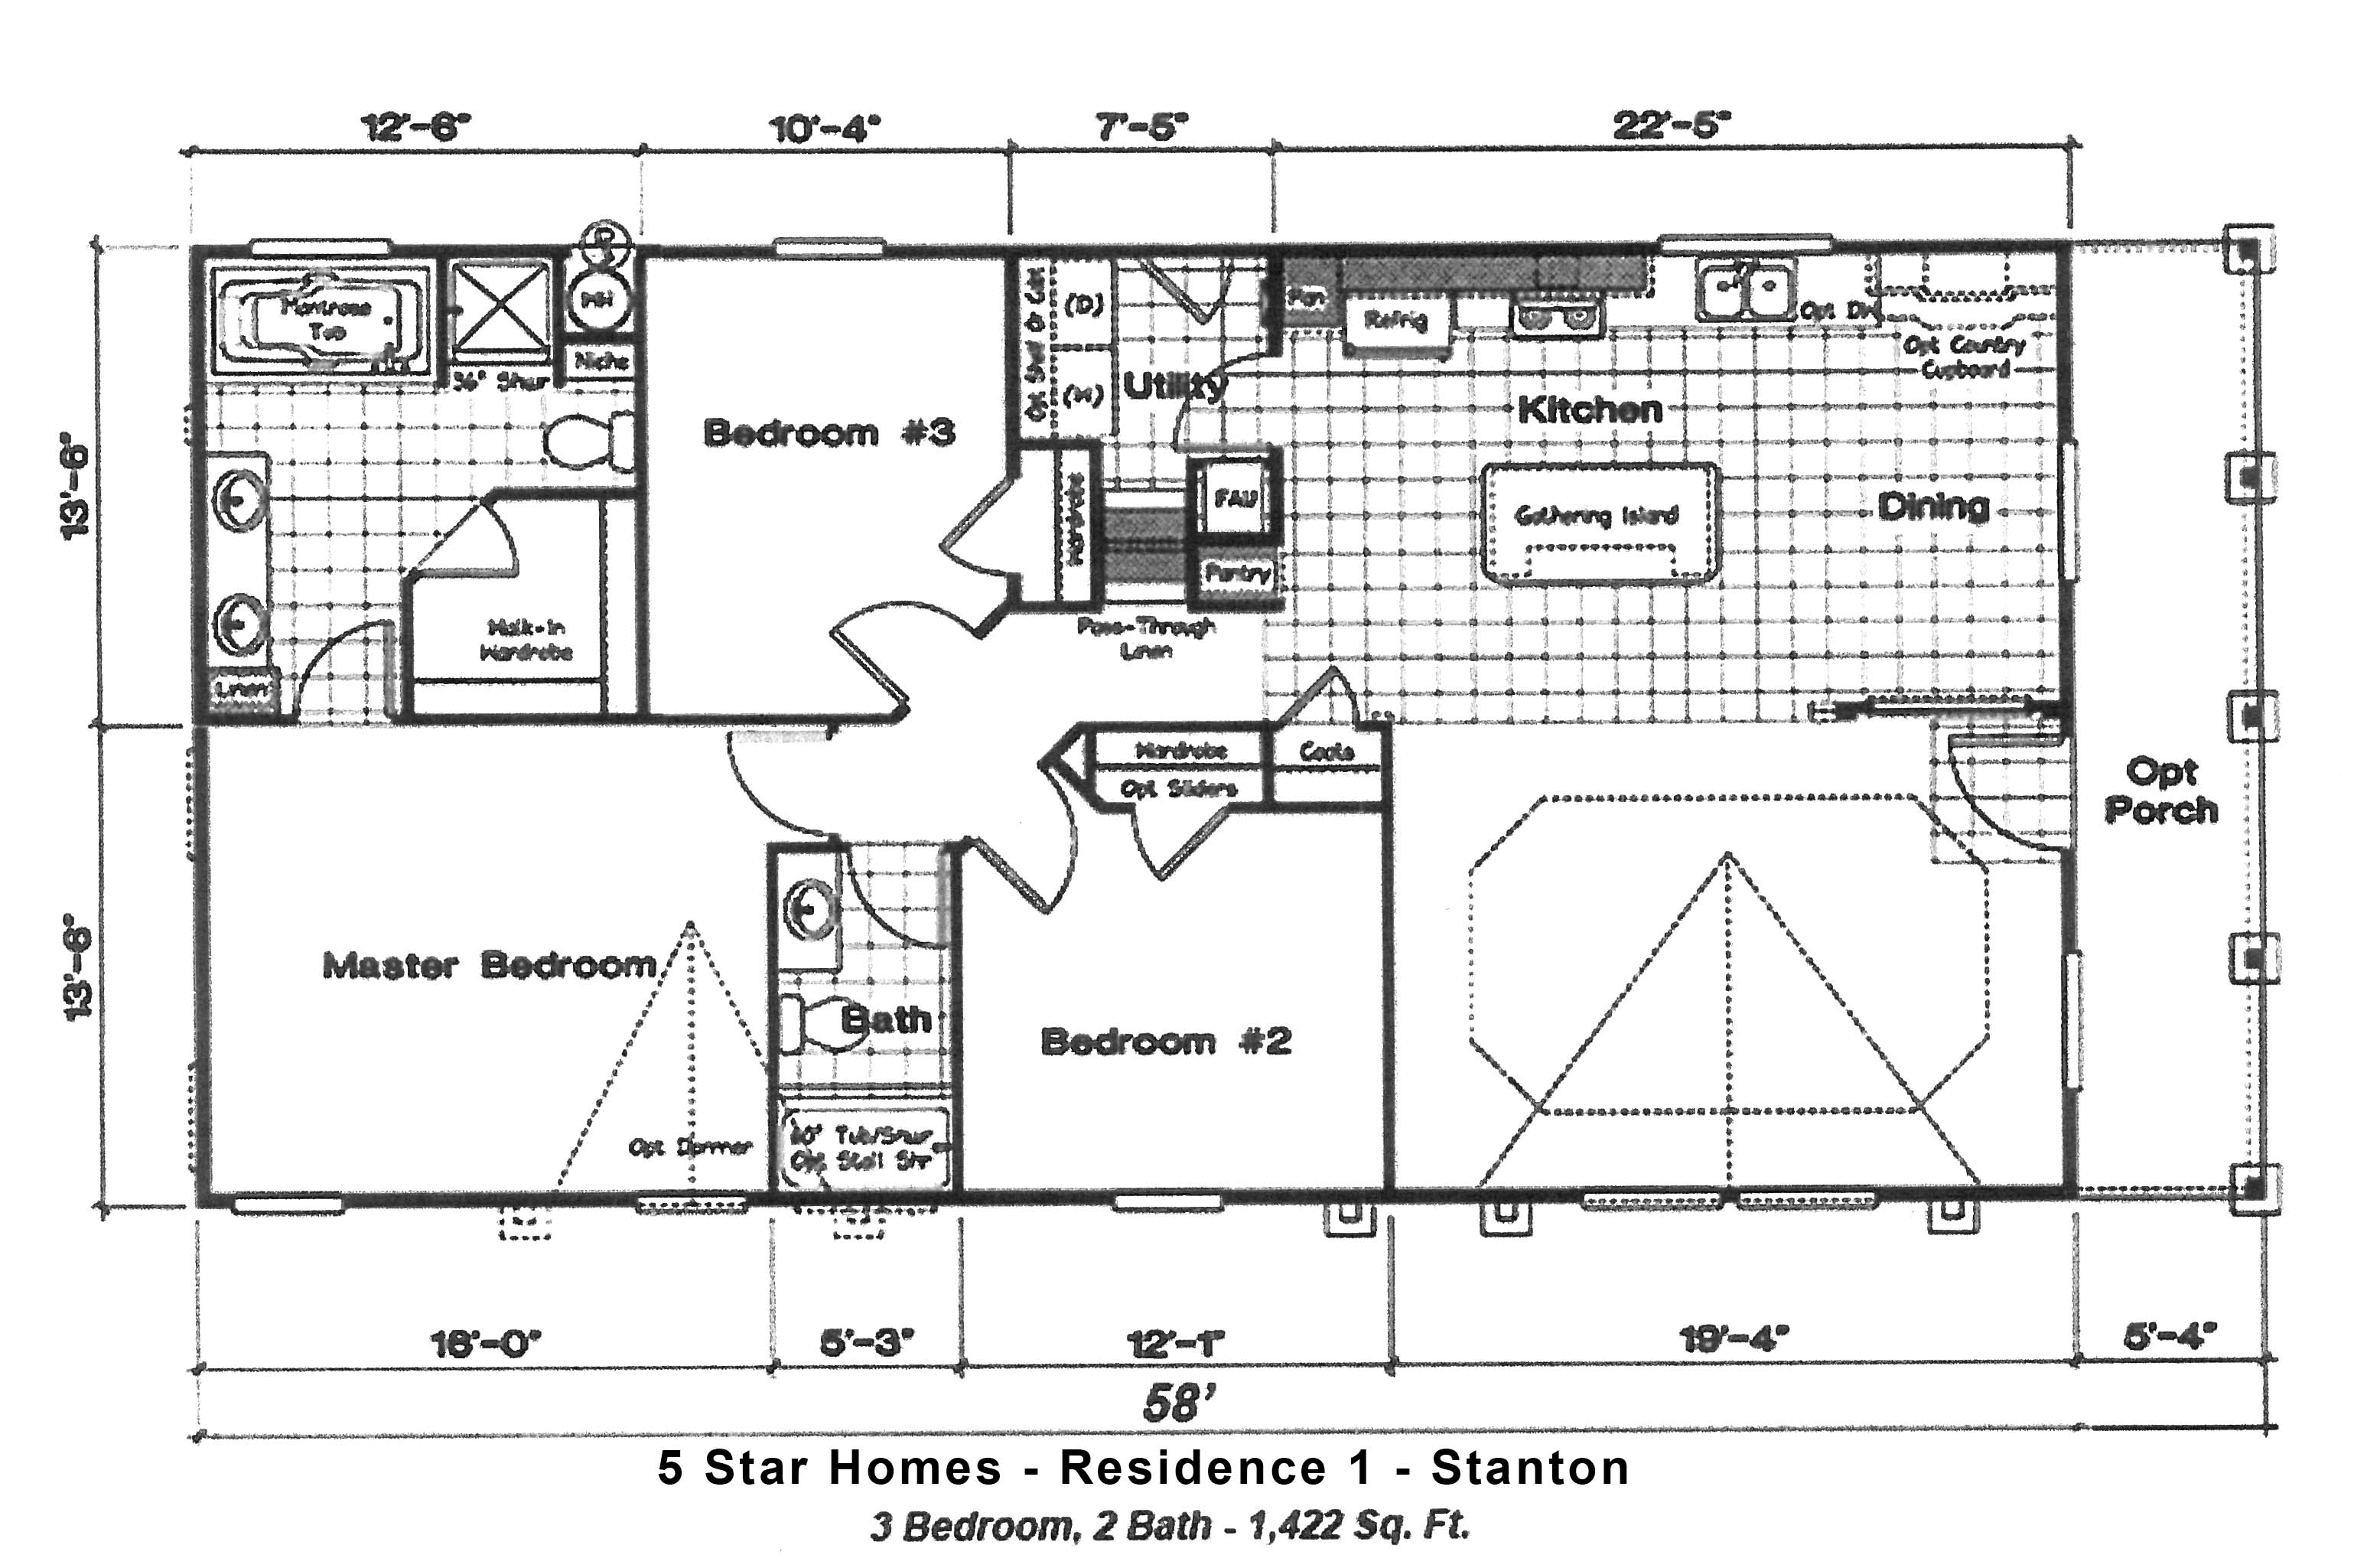 5 Star Homes - Residence 1 - Stanton Floorplan